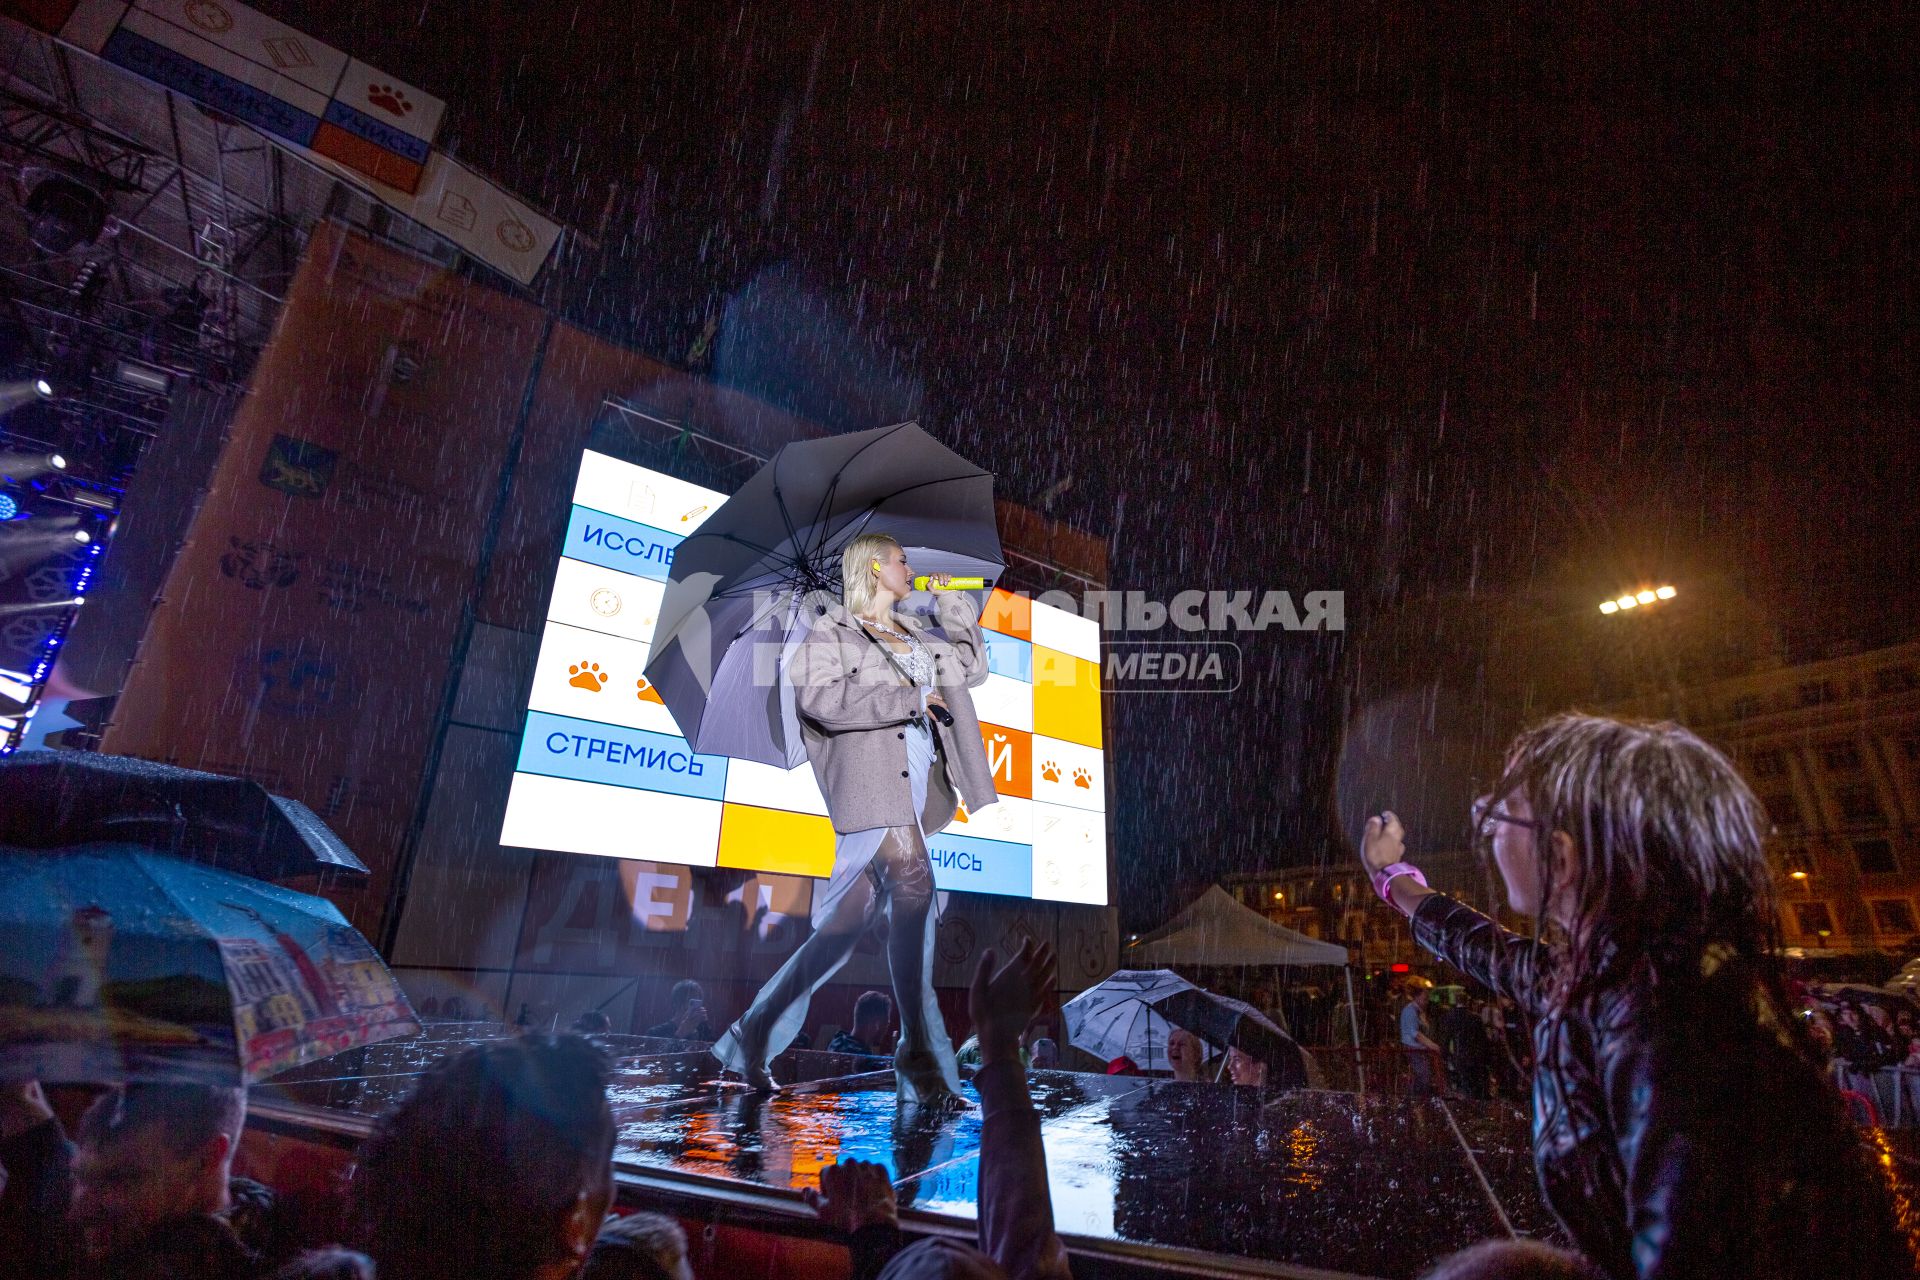 Владивосток. Певица Клава Кока выступает на концерте в честь Дня знаний.